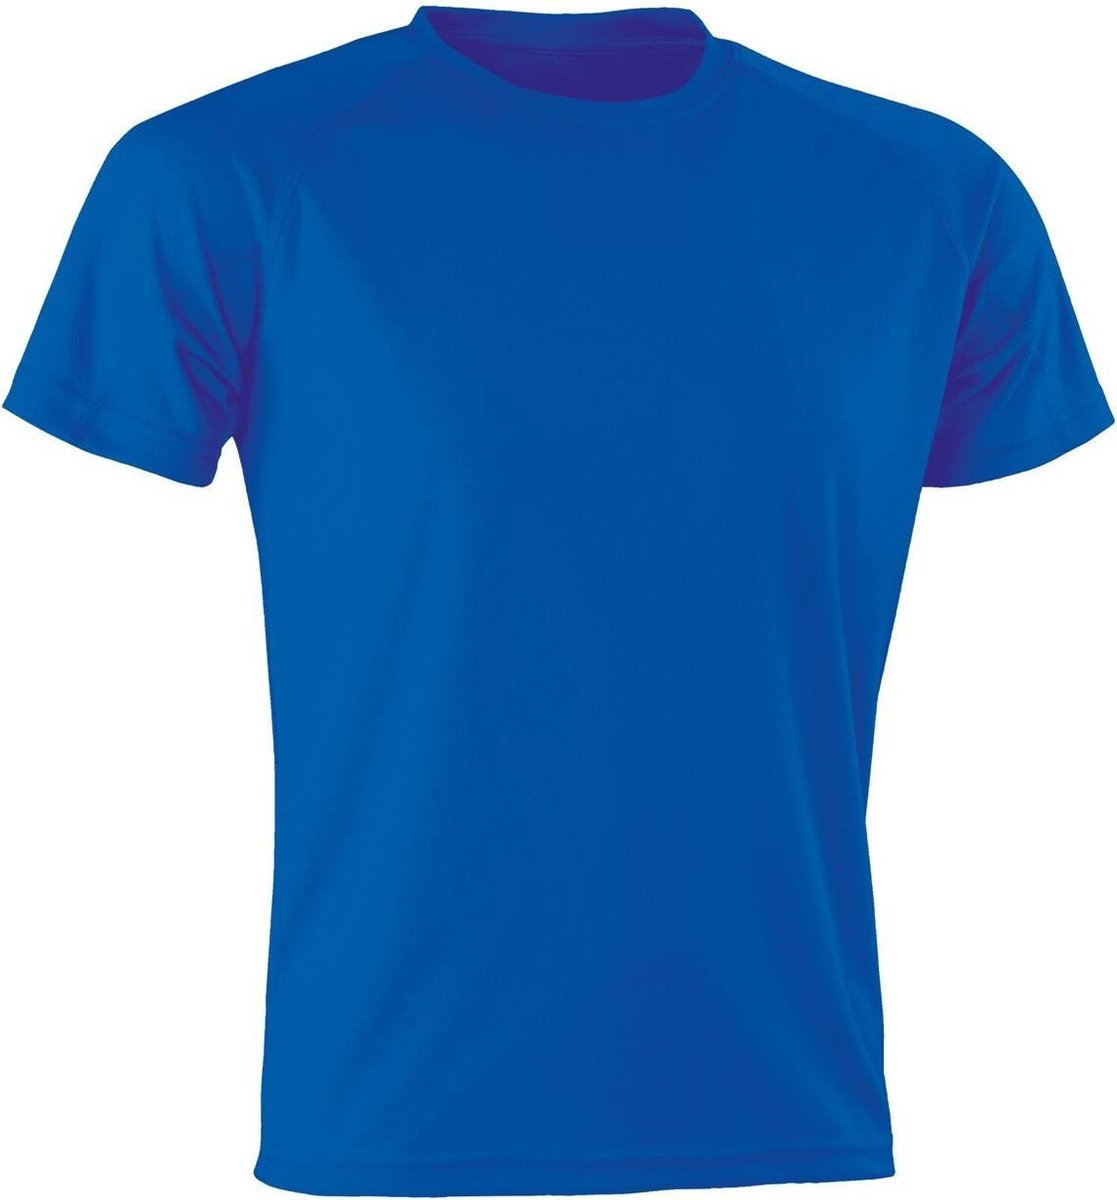 Spiro Heren Aircool T-Shirt (Koninklijk)